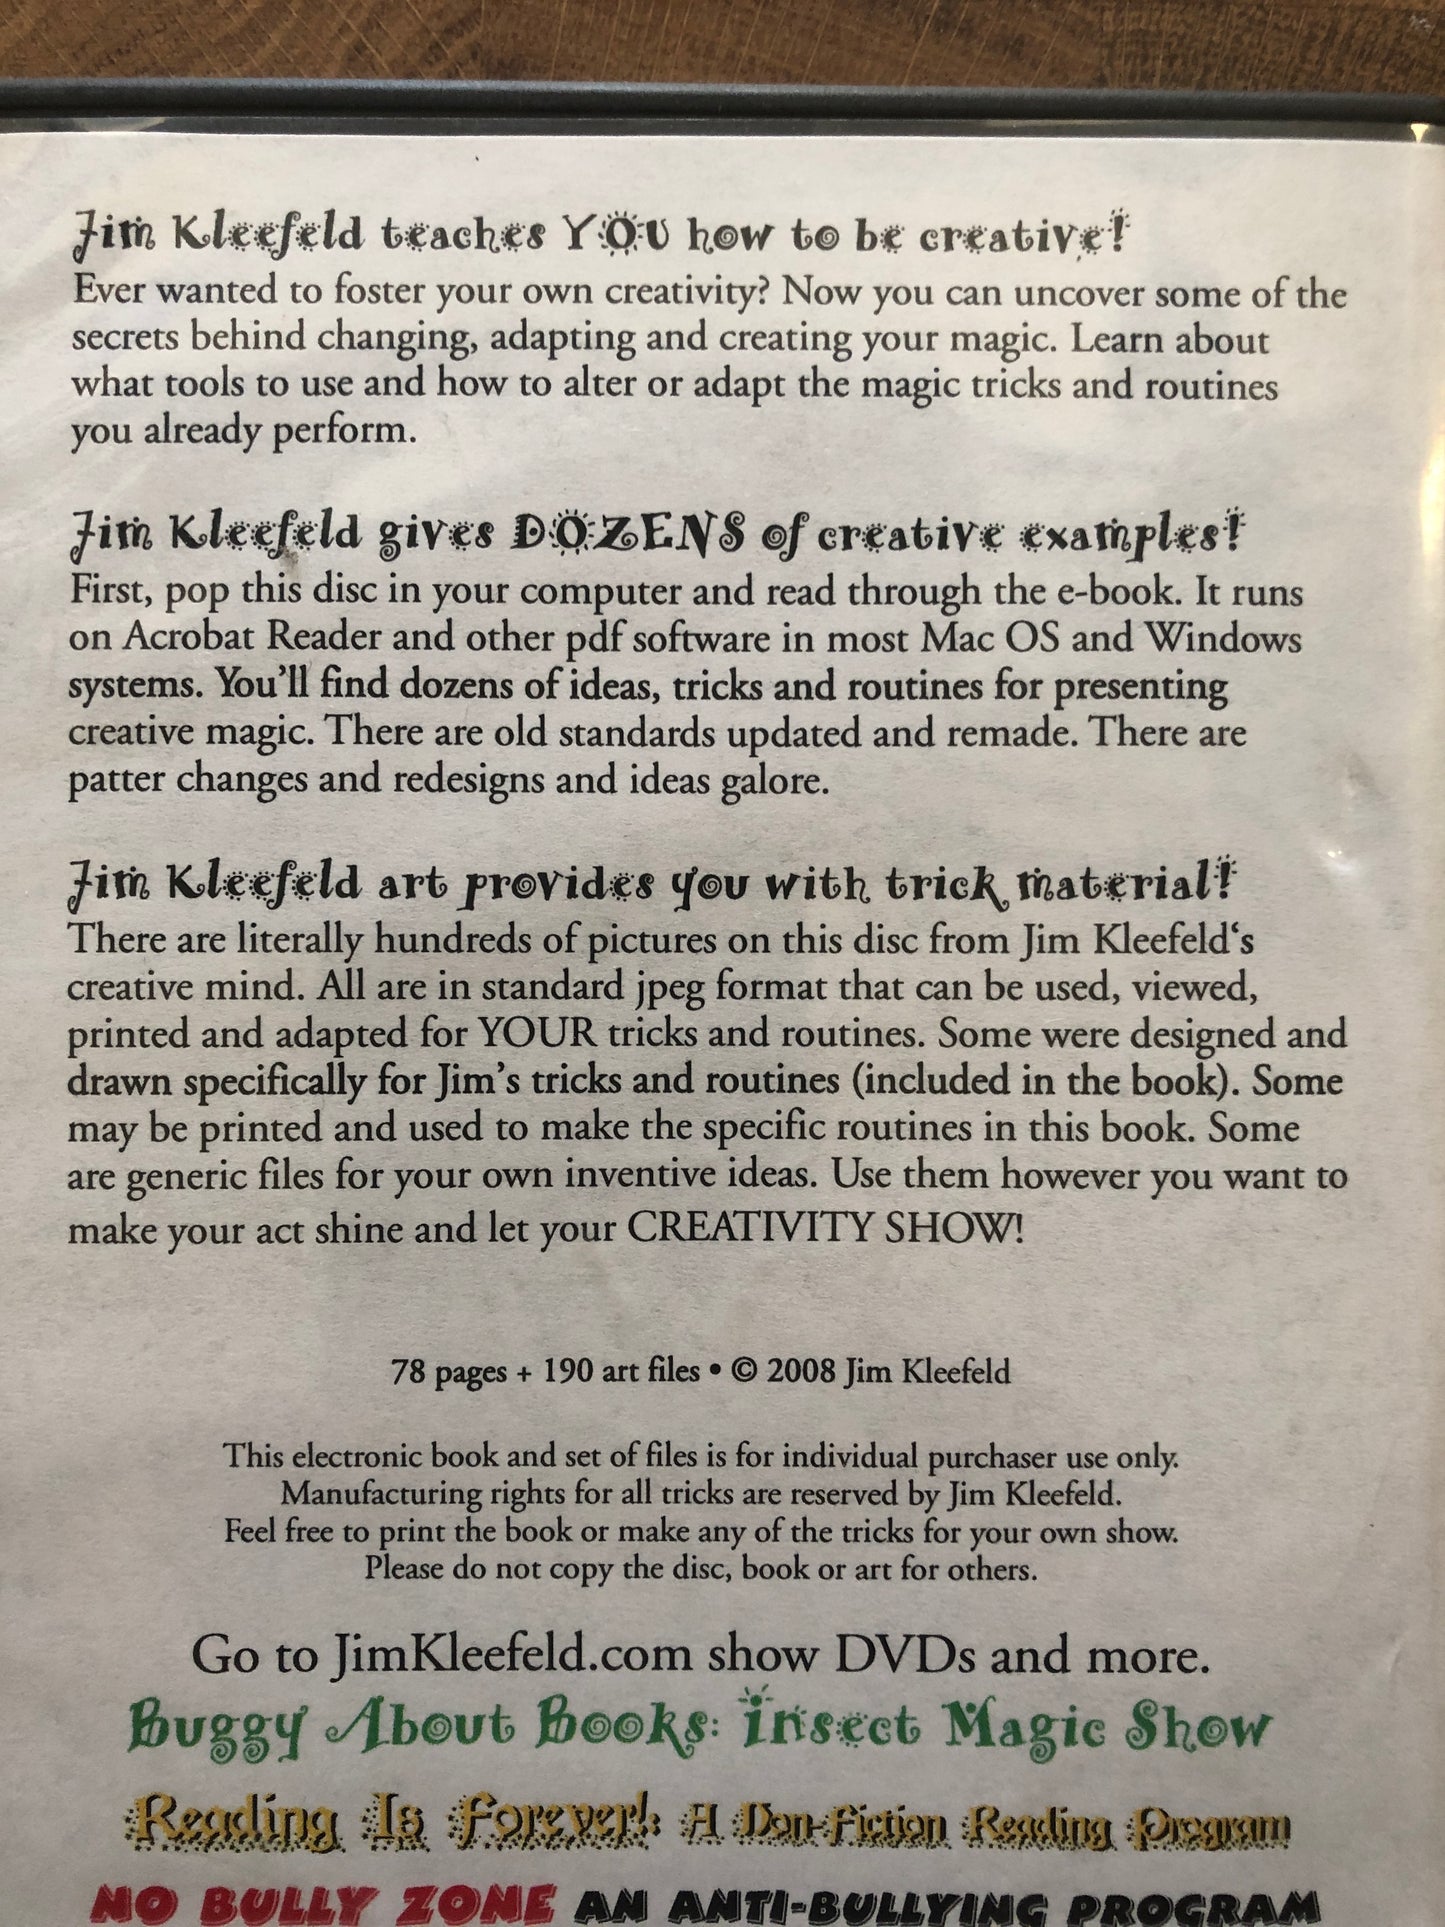 Creativity Shows! - Jim Kleefeld - CD-Rom